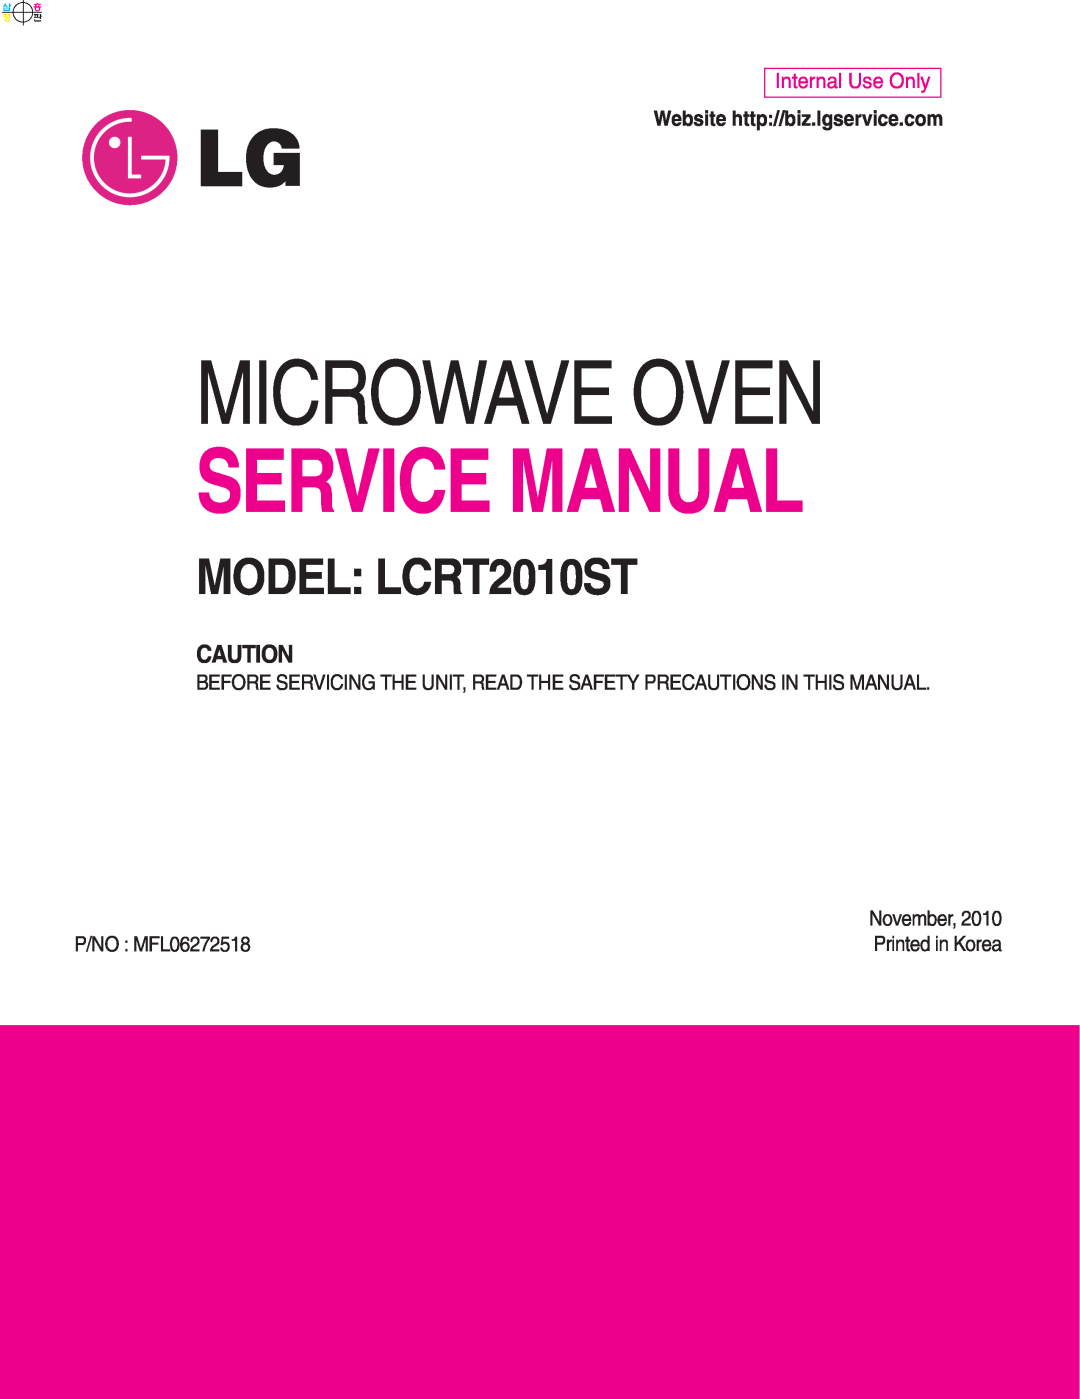 Frigidaire service manual Microwave Oven, MODEL LCRT2010ST, Internal Use Only, Website http//biz.lgservice.com 